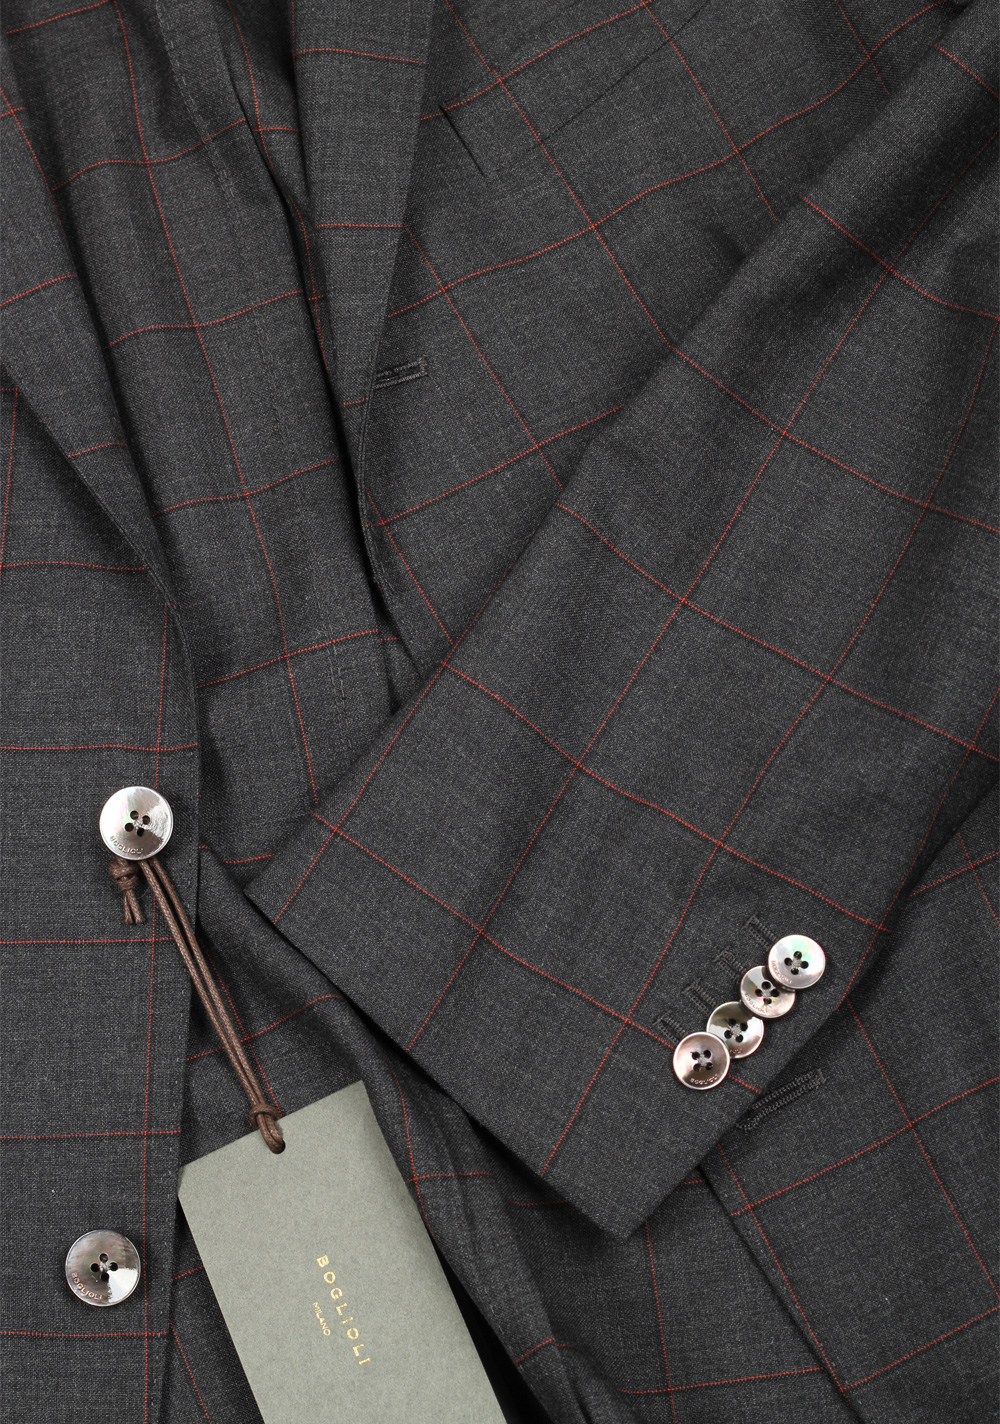 Boglioli K Jacket Gray Checked Suit Size 48 / 38R U.S. | Costume Limité